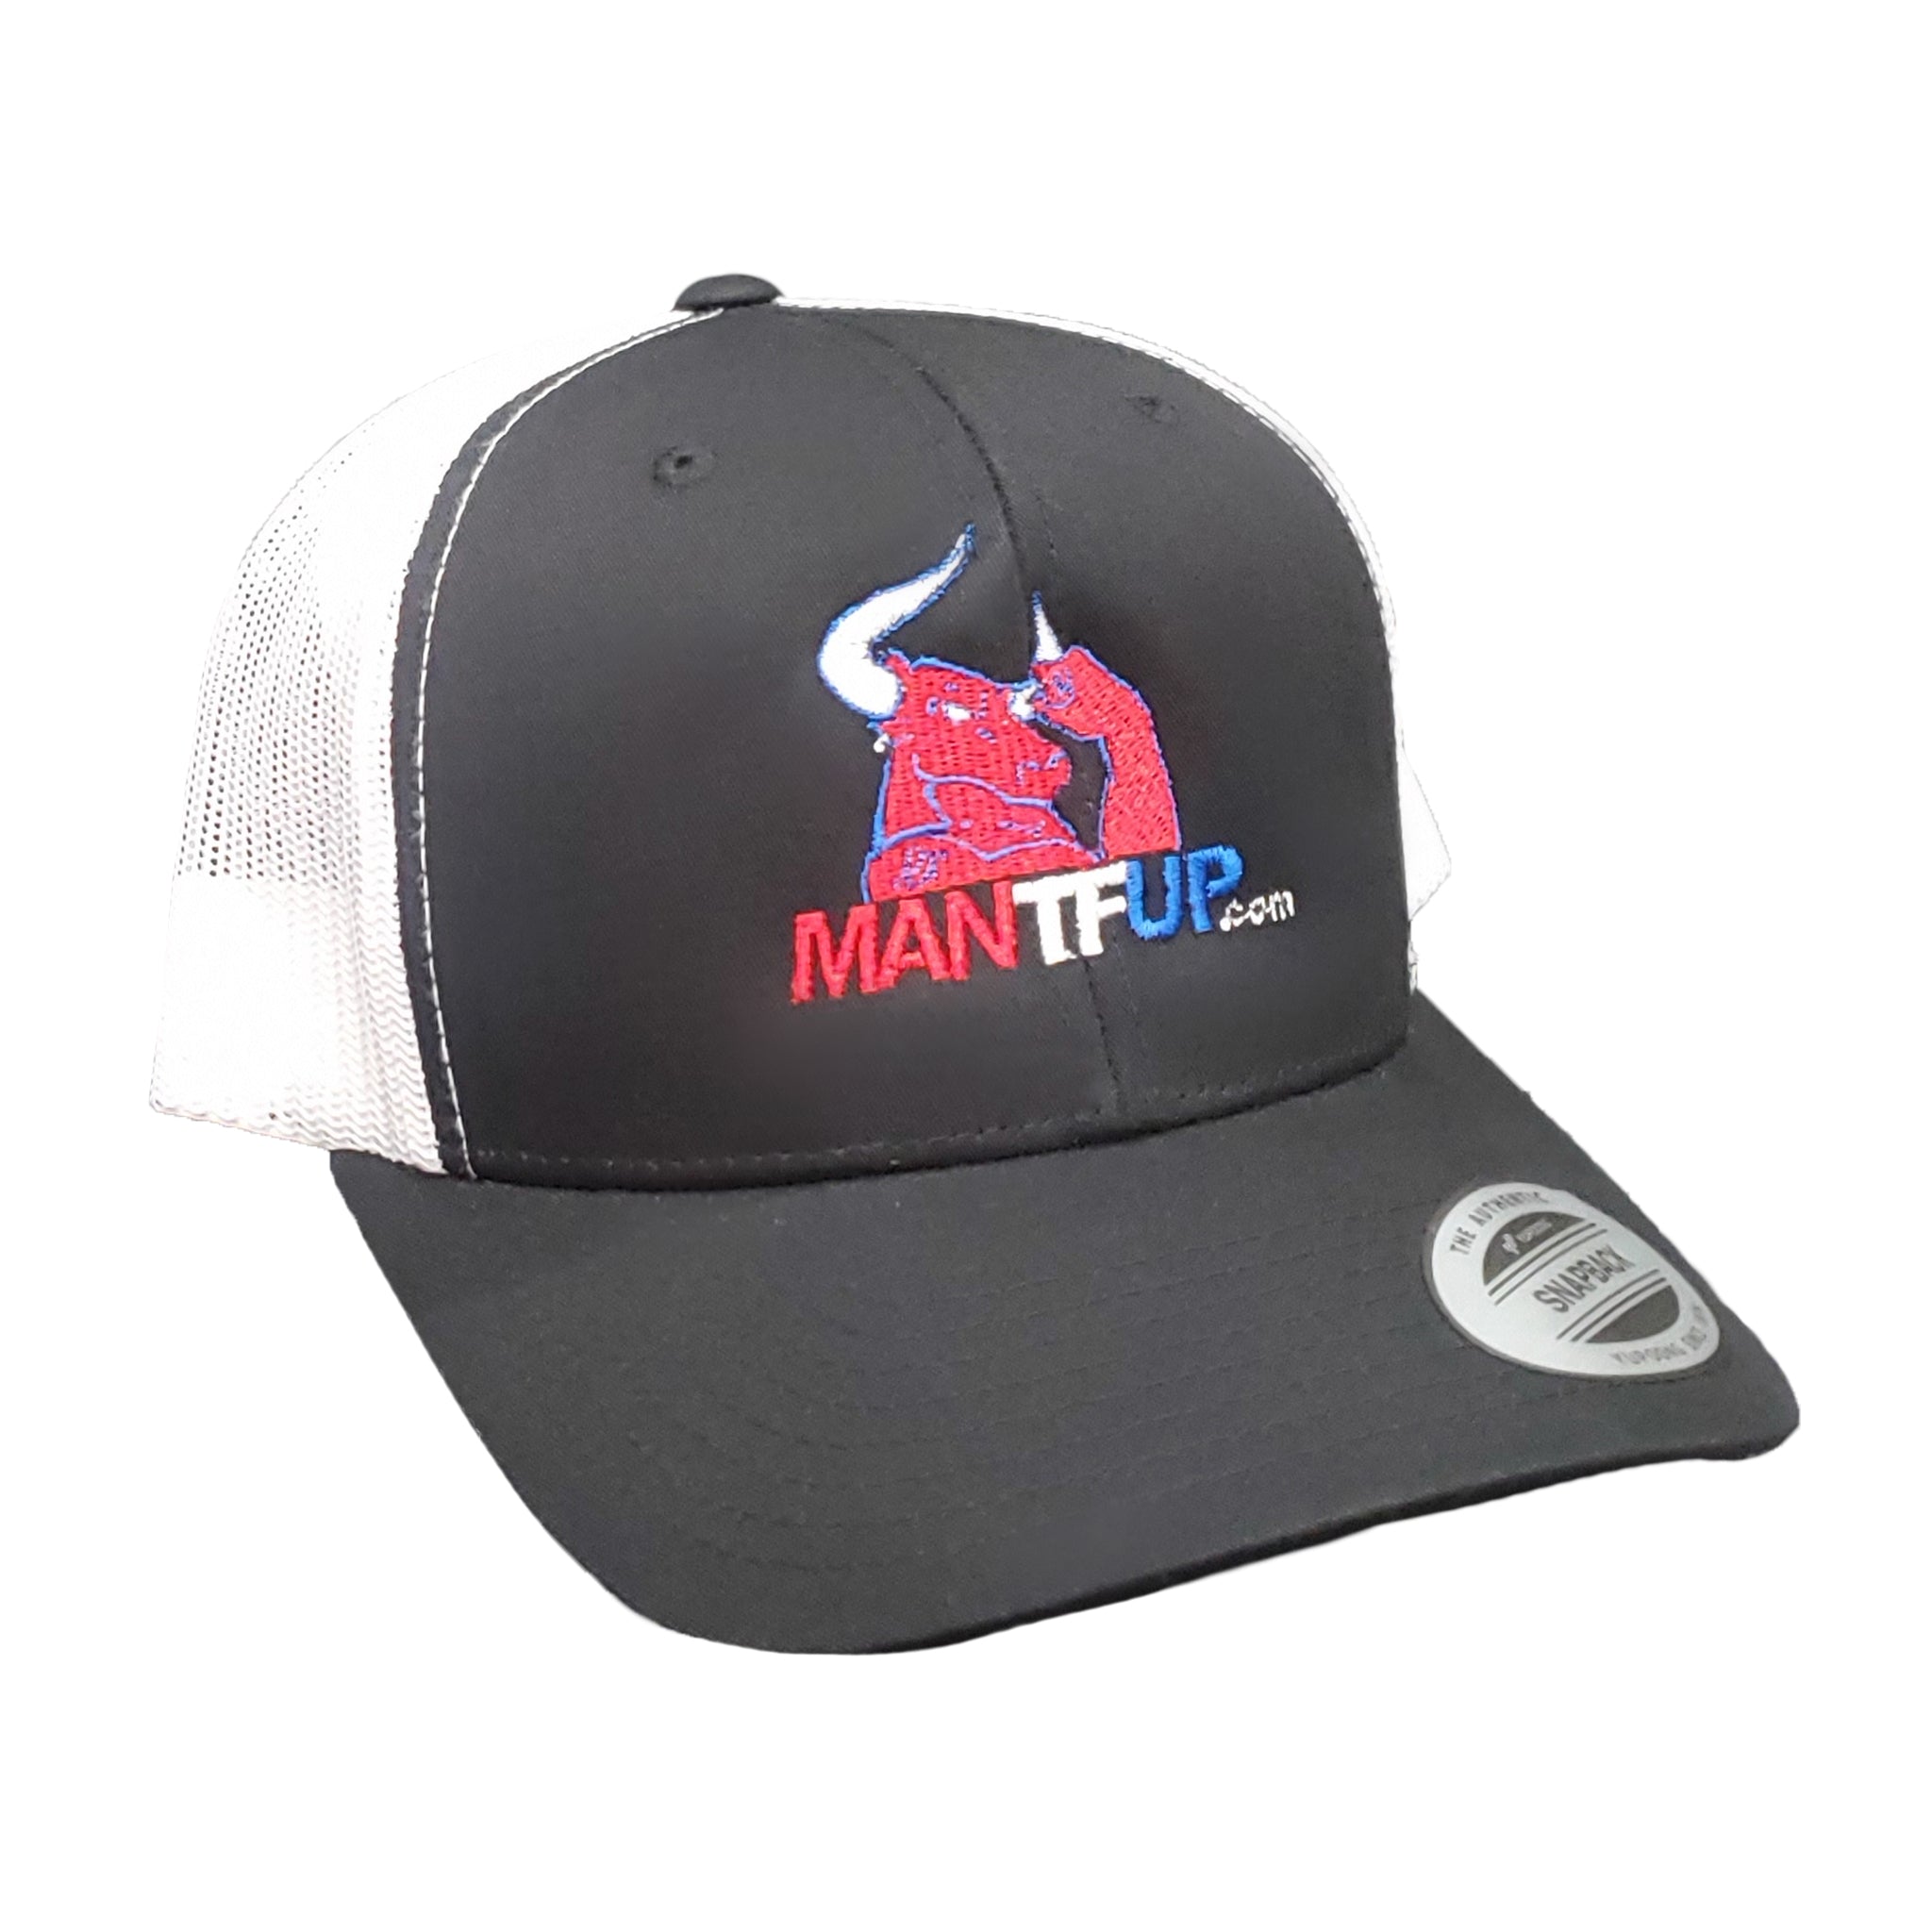 The MANTFUP Bull Cap